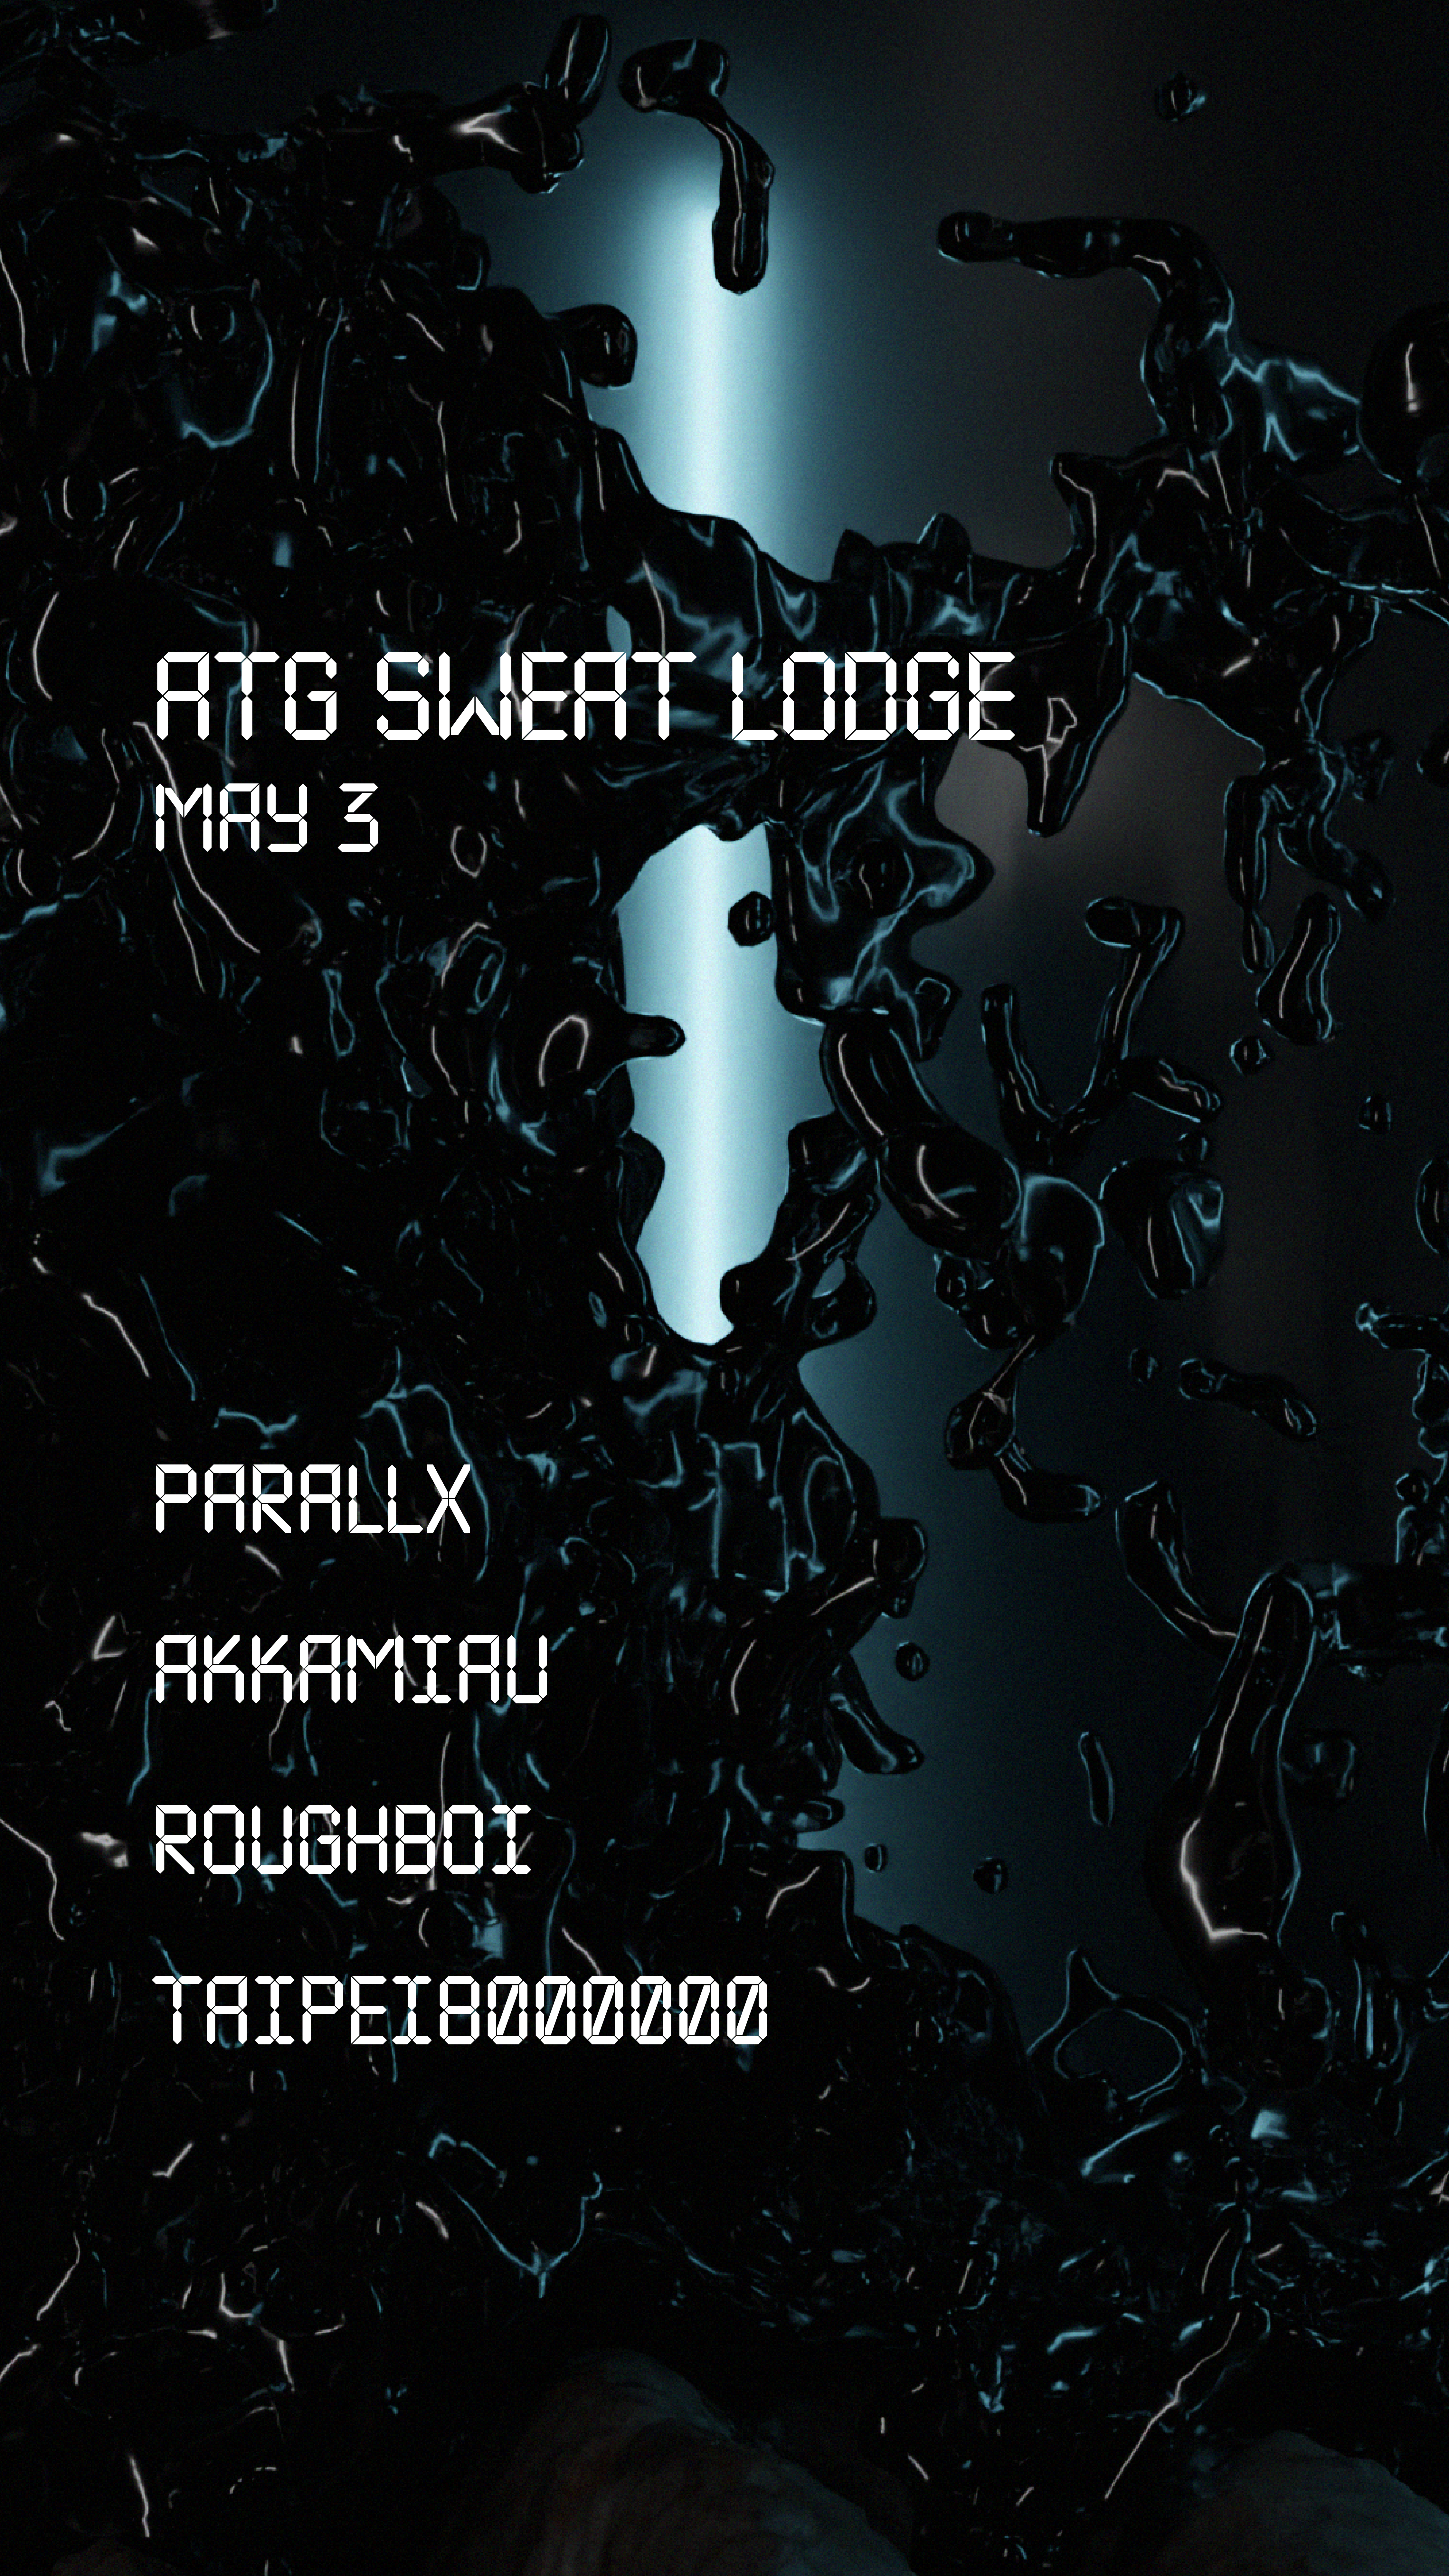 ATG Sweat Lodge: Parallx, Akkamiau, Roughboi, TAIPEI8000000 - フライヤー表